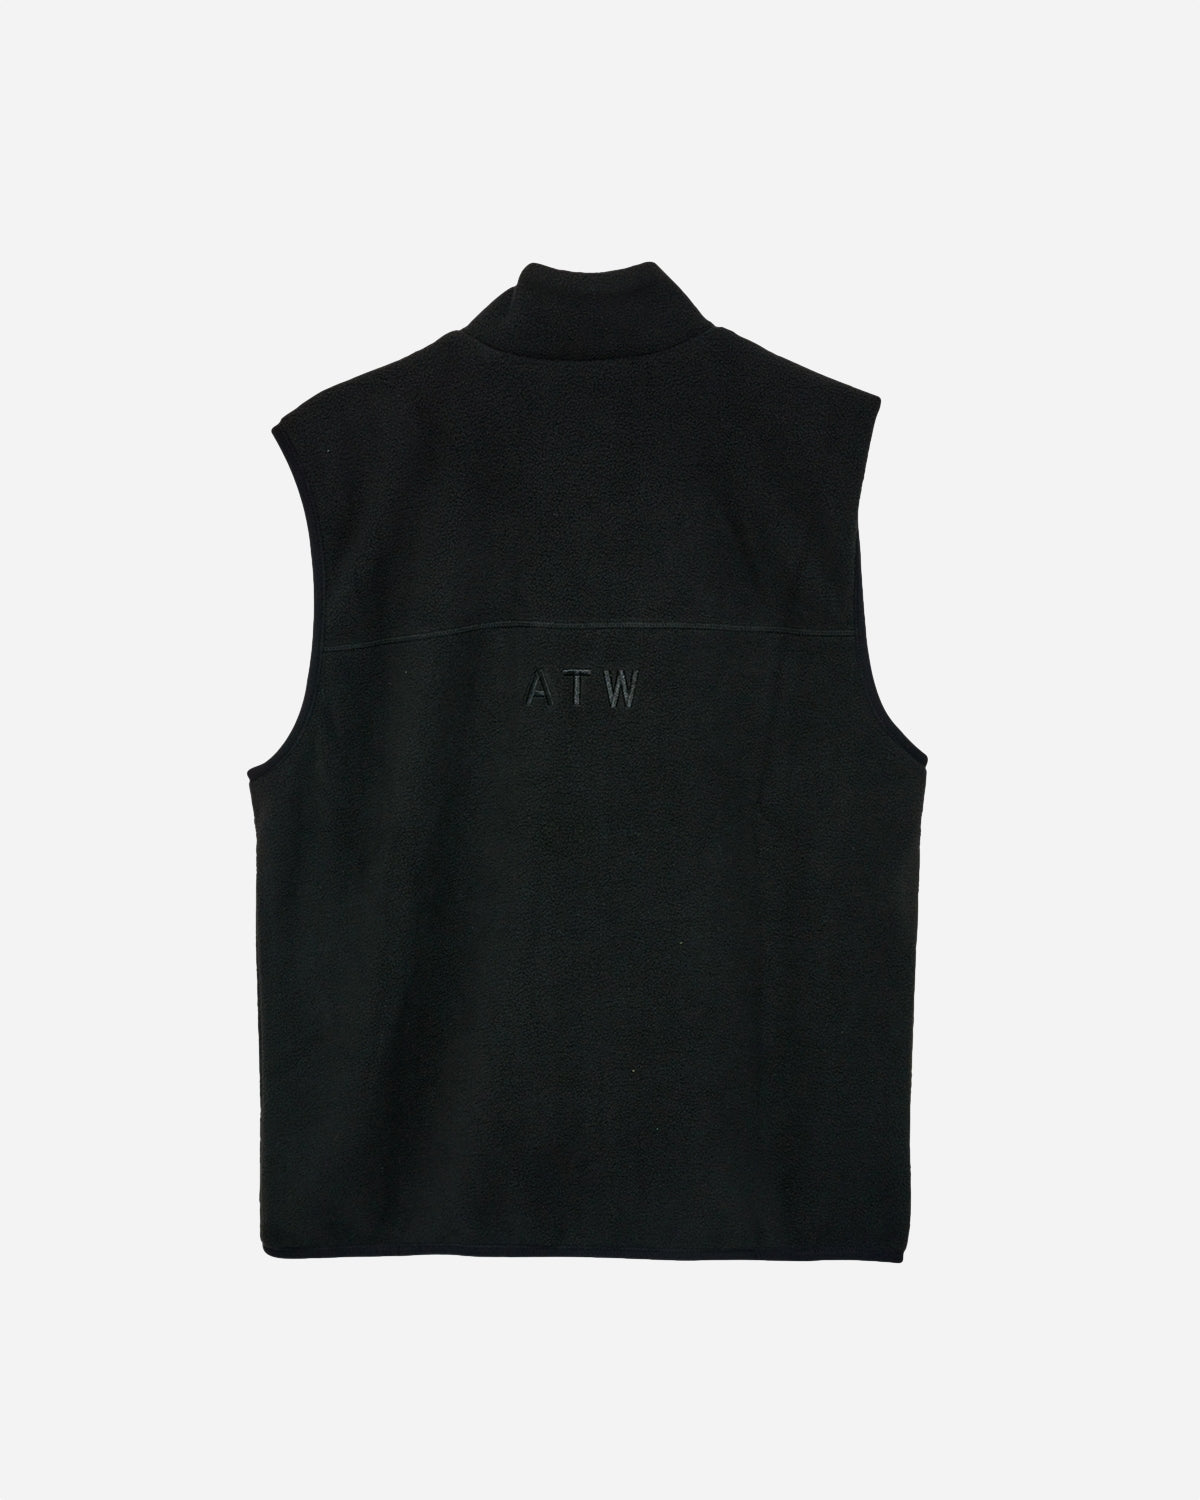 HALO Teddy Fleece Vest - Black